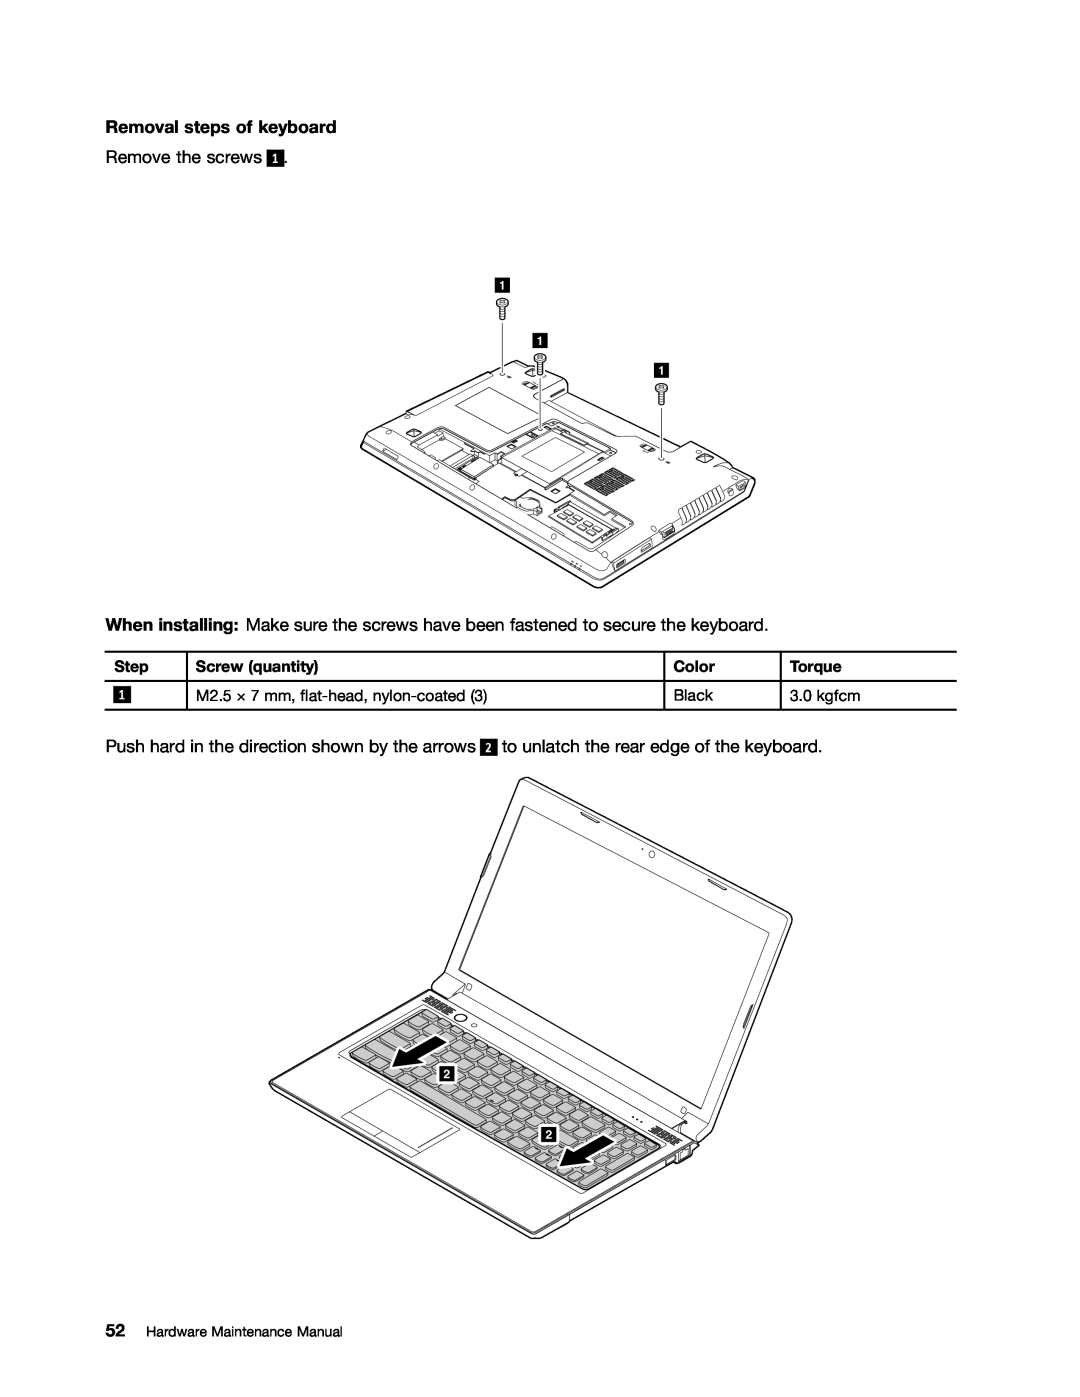 Lenovo B575E manual Removal steps of keyboard, Hardware Maintenance Manual 